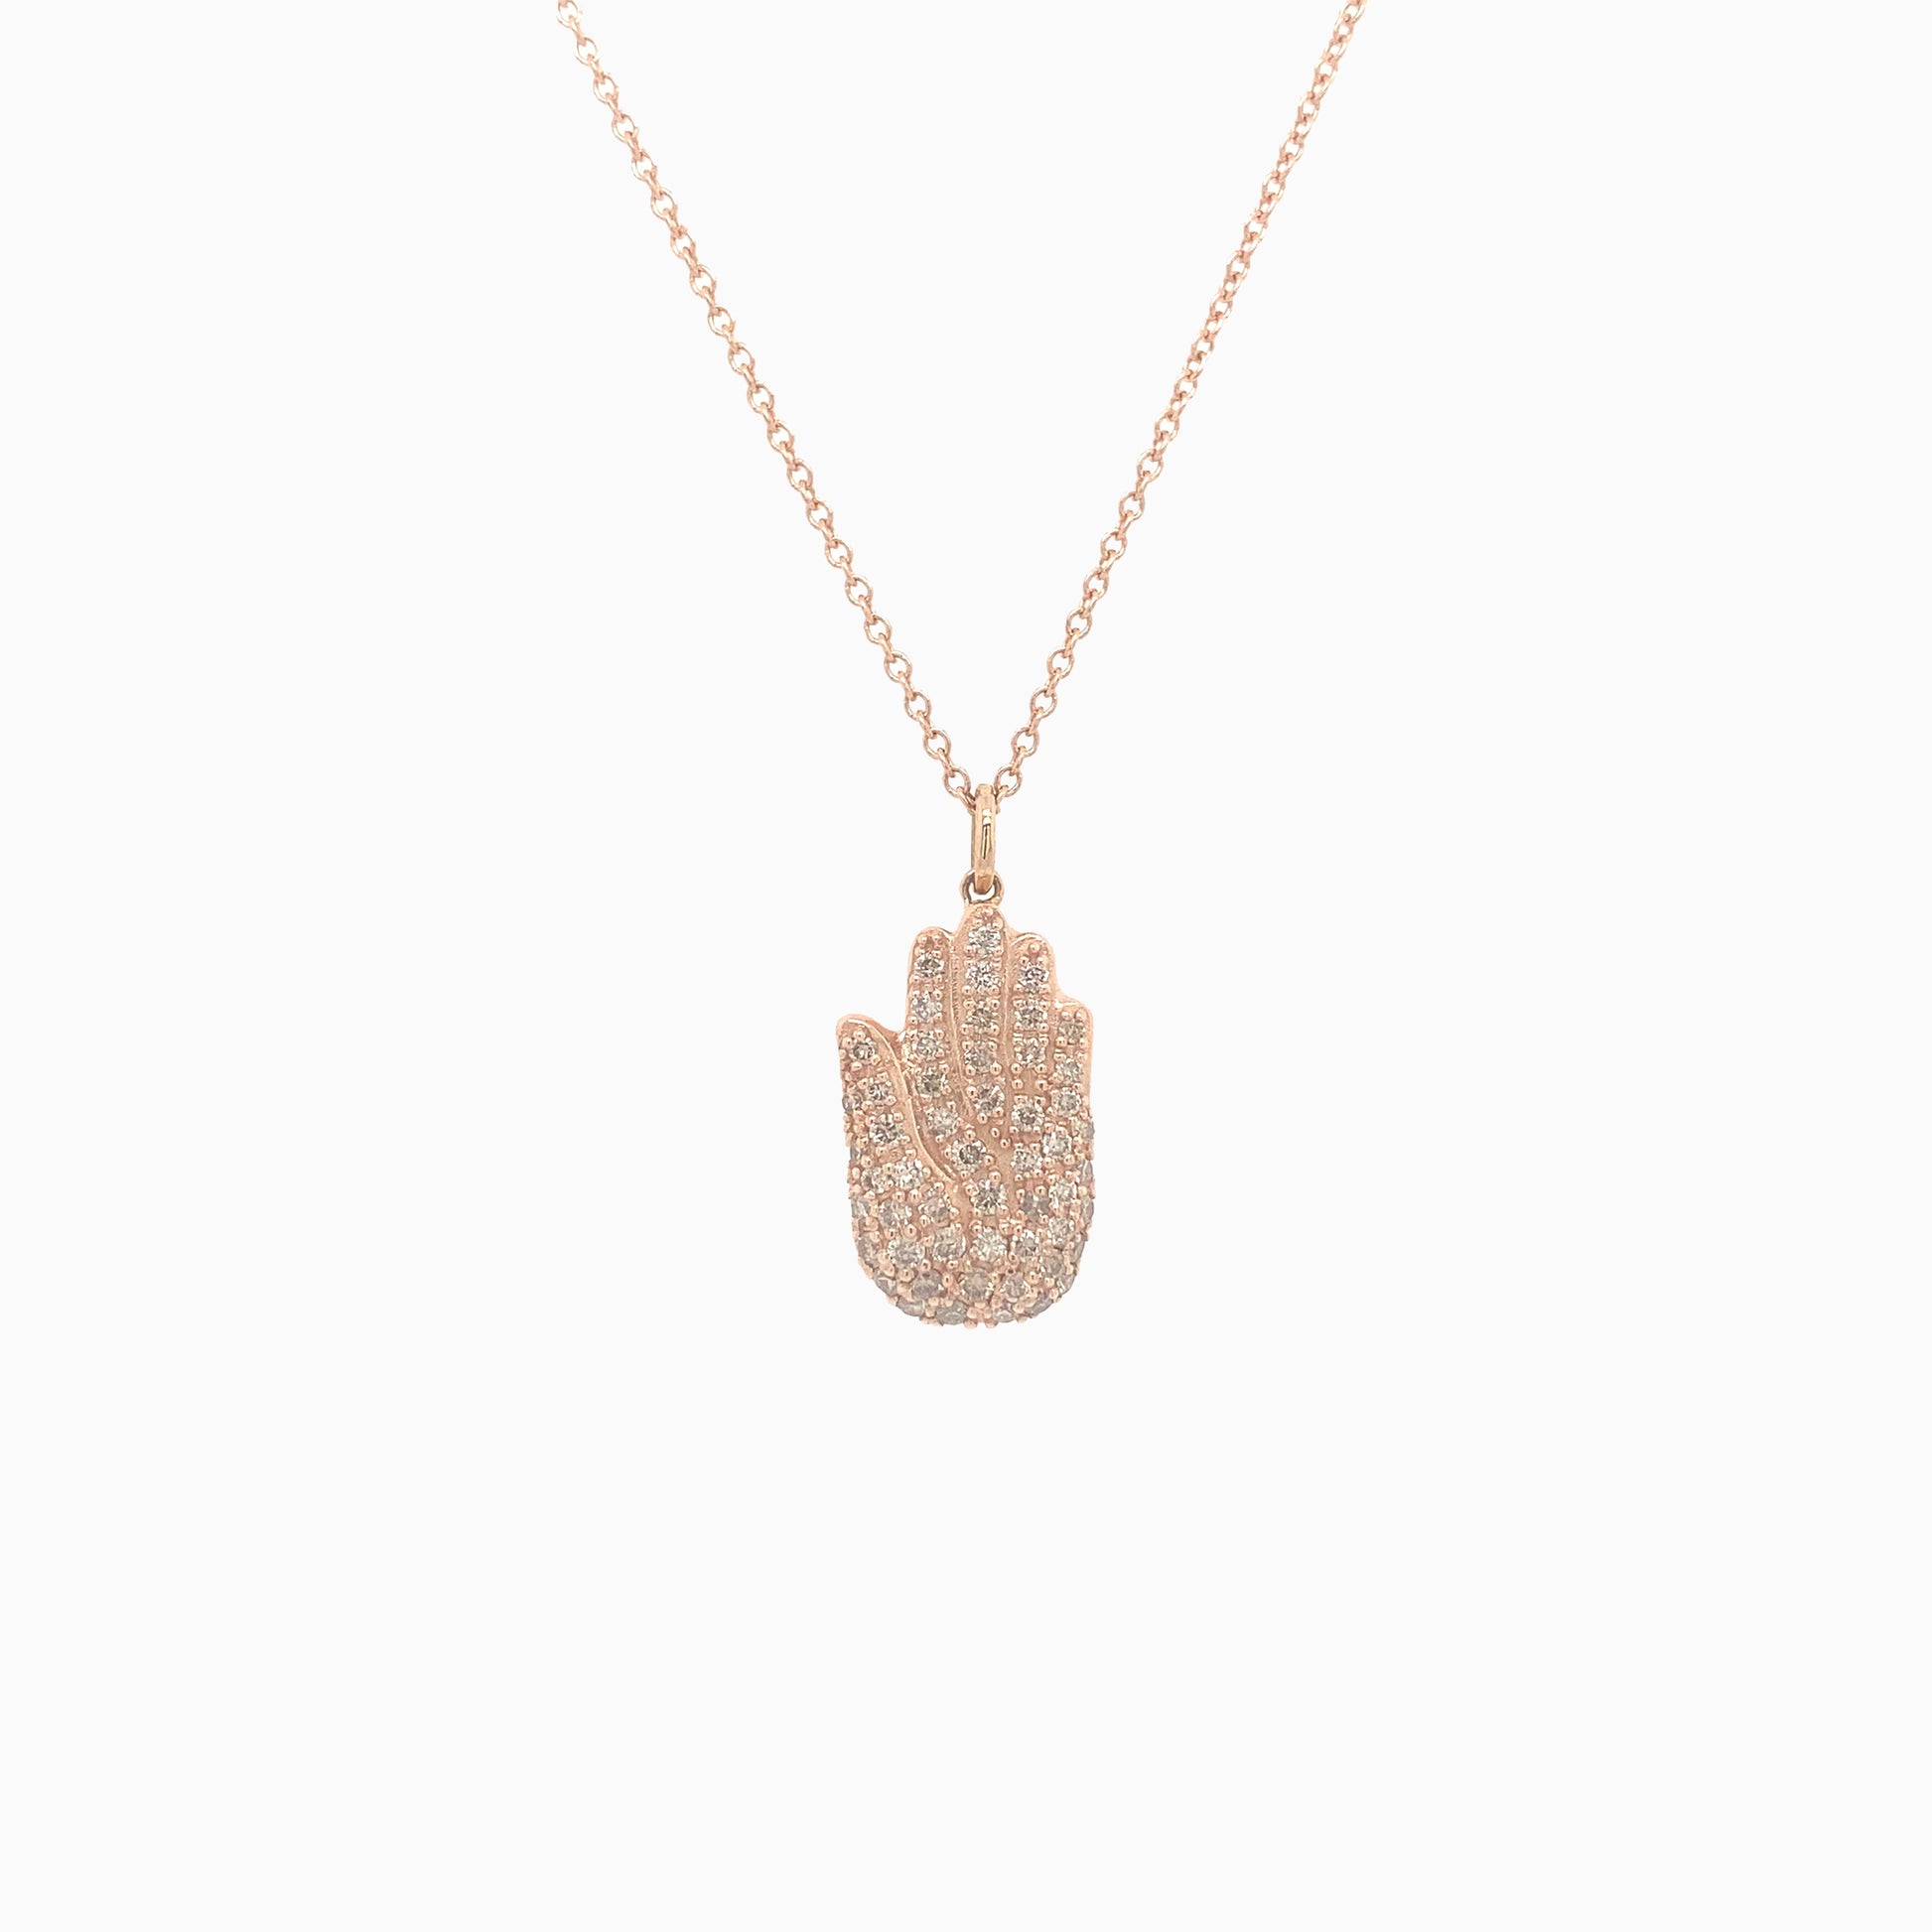 Hamsa (Hand of God) Champagne Diamond Pave Necklace on a white background